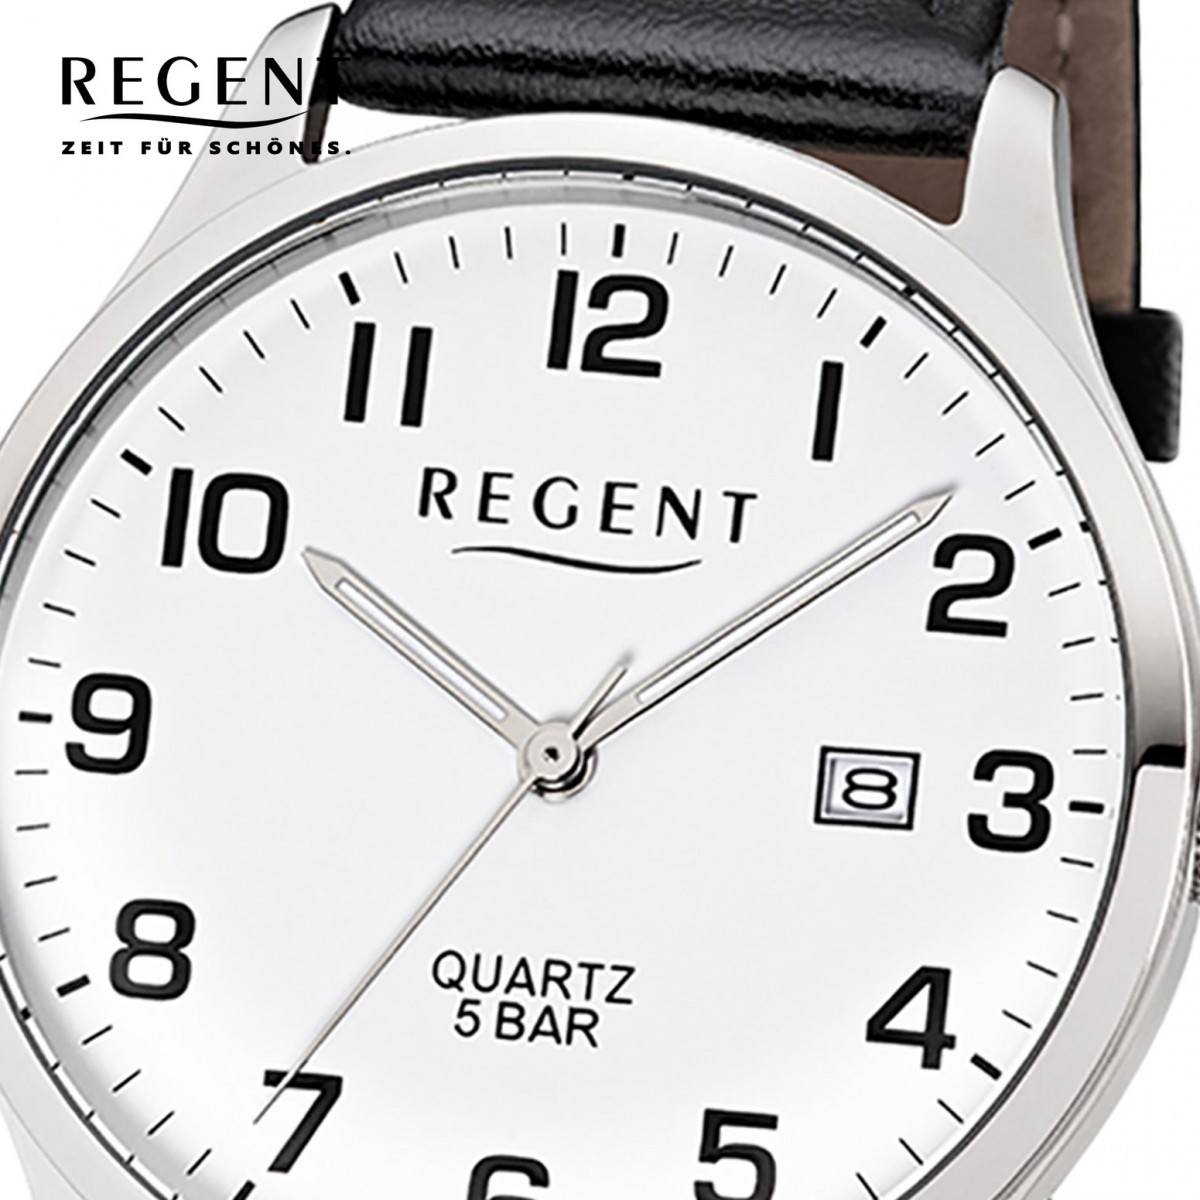 Herren-Armbanduhr Leder-Armband Quarz-Uhr schwarz F-1241 Regent UR1113405